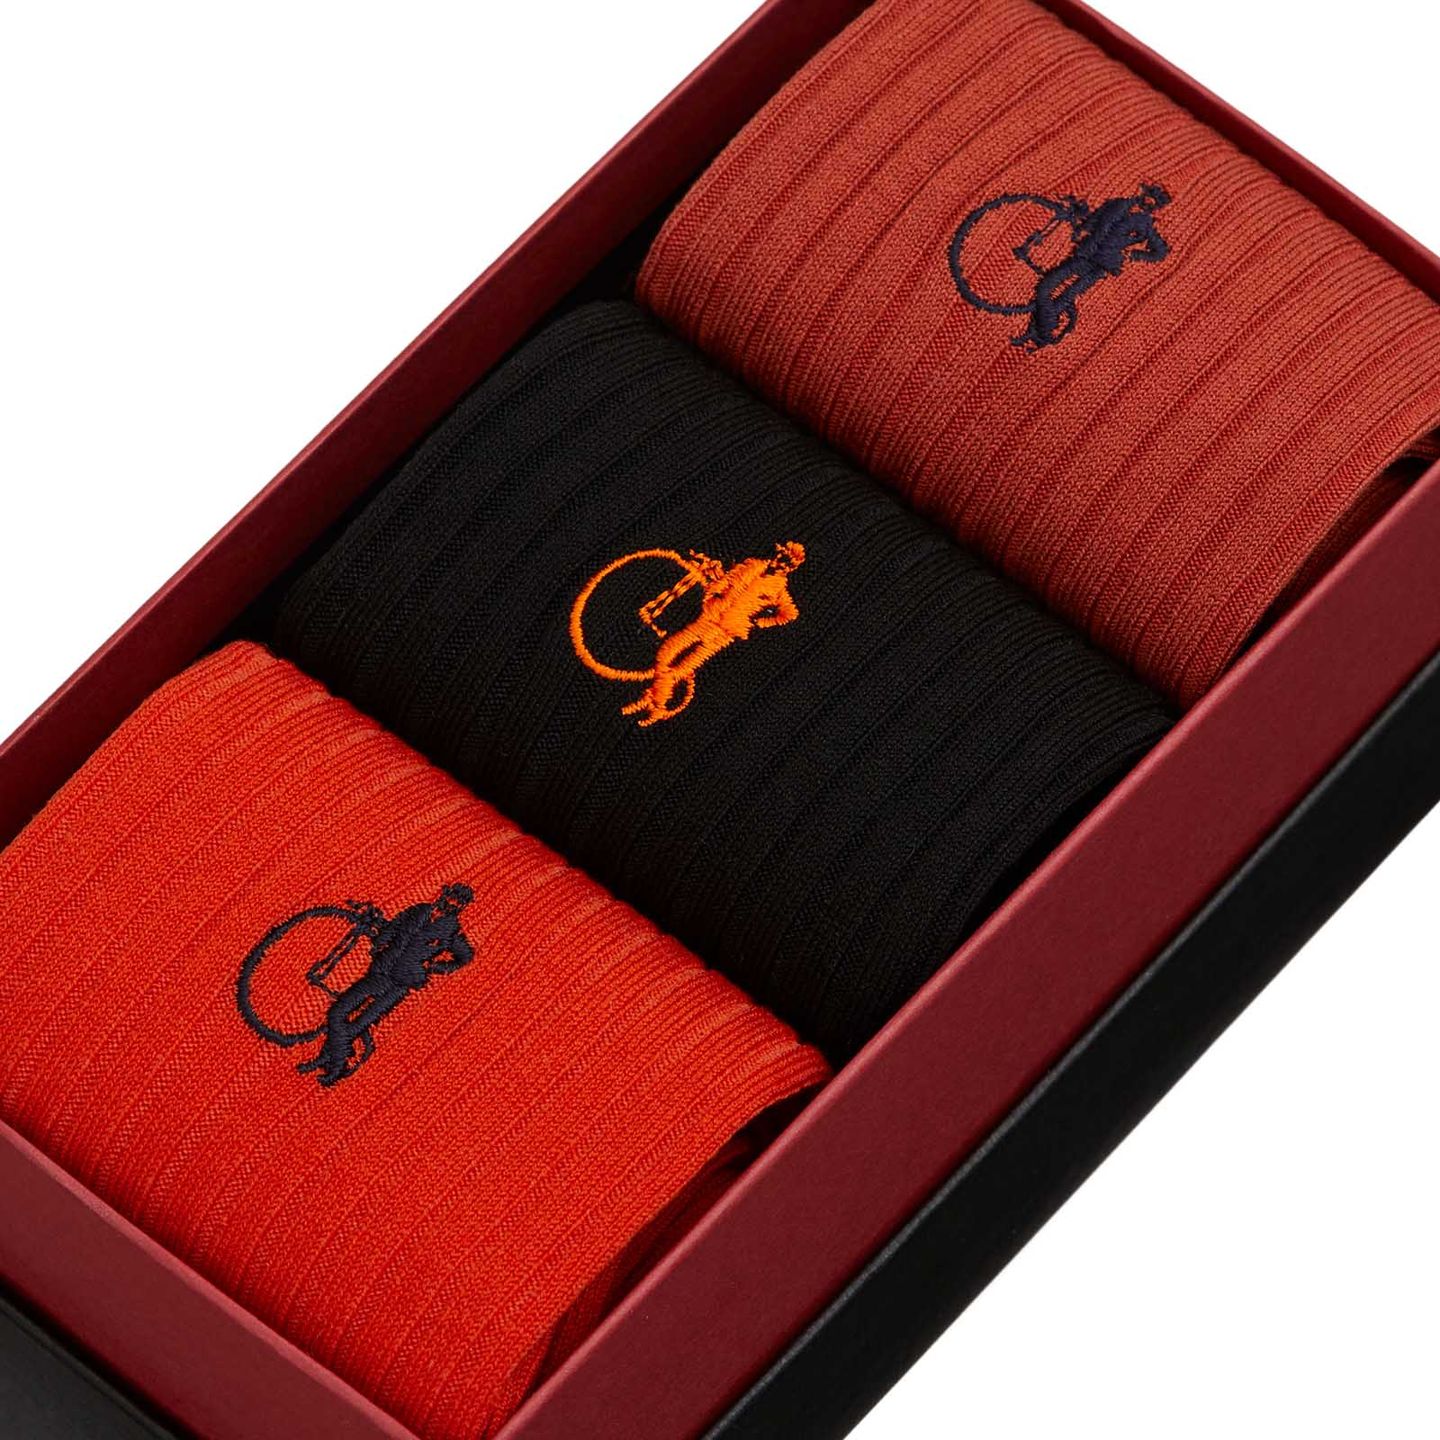 Rust collection in a presentation box, with dark orange, black and vibrant orange socks